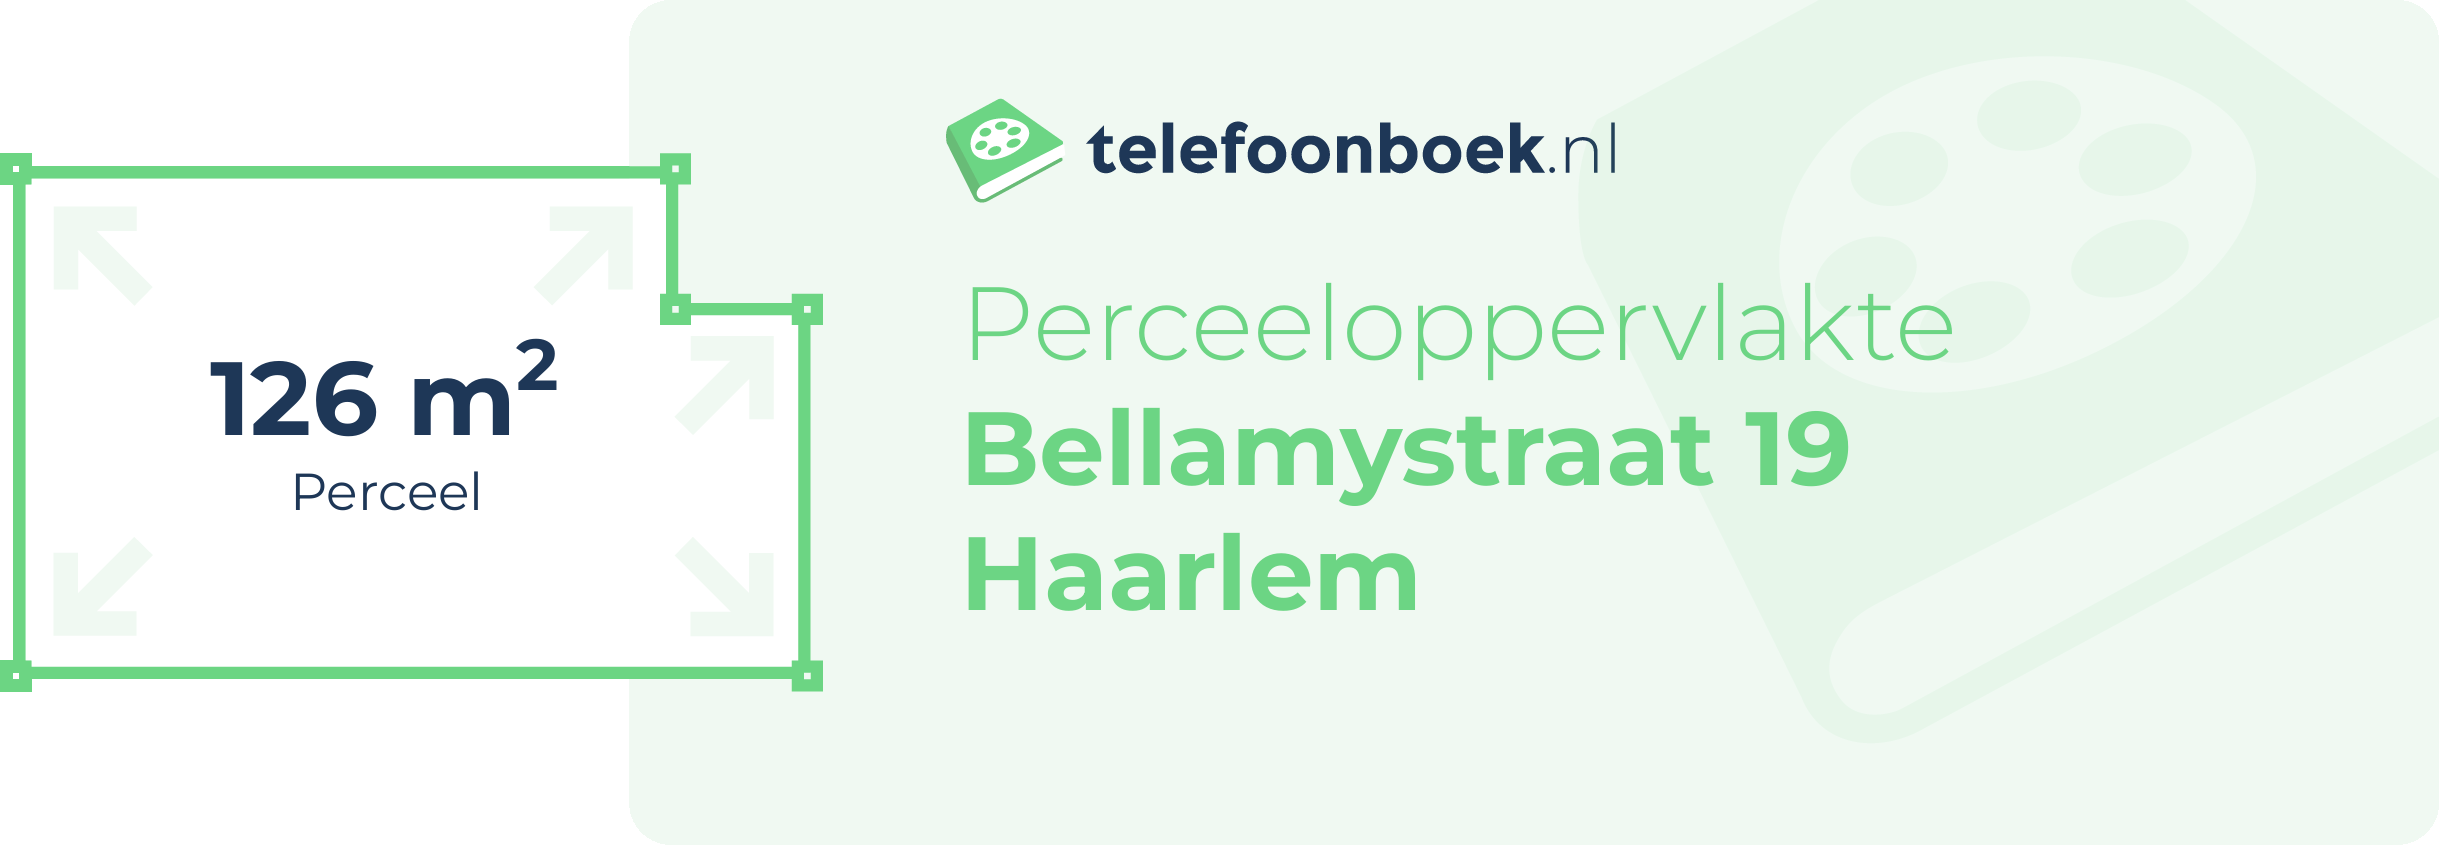 Perceeloppervlakte Bellamystraat 19 Haarlem